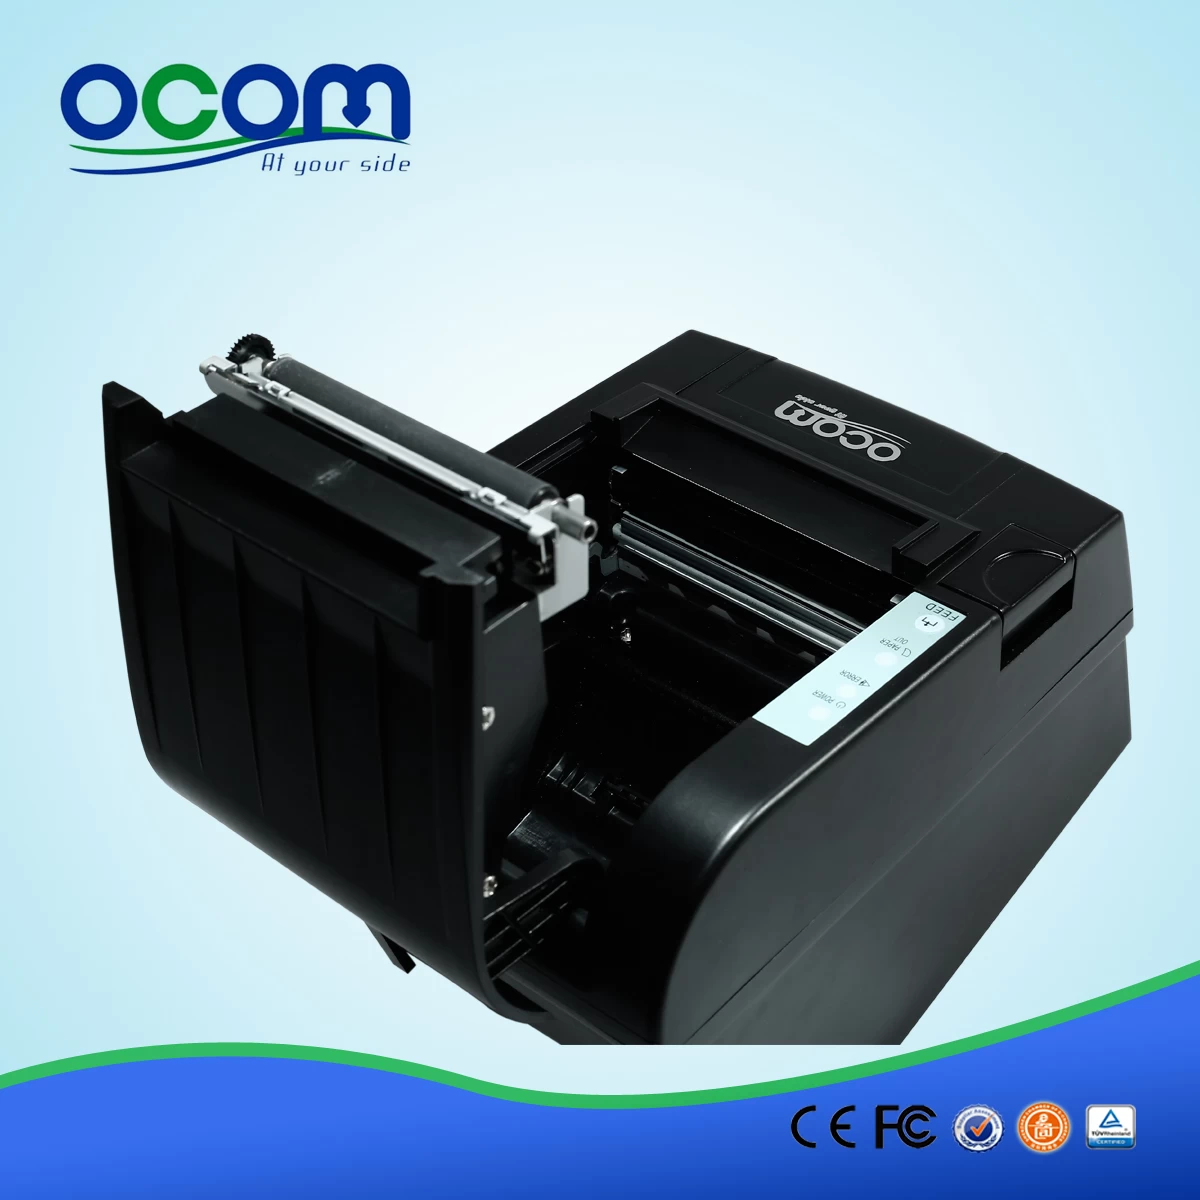 80mm Wifi Thermal Receipt Printer